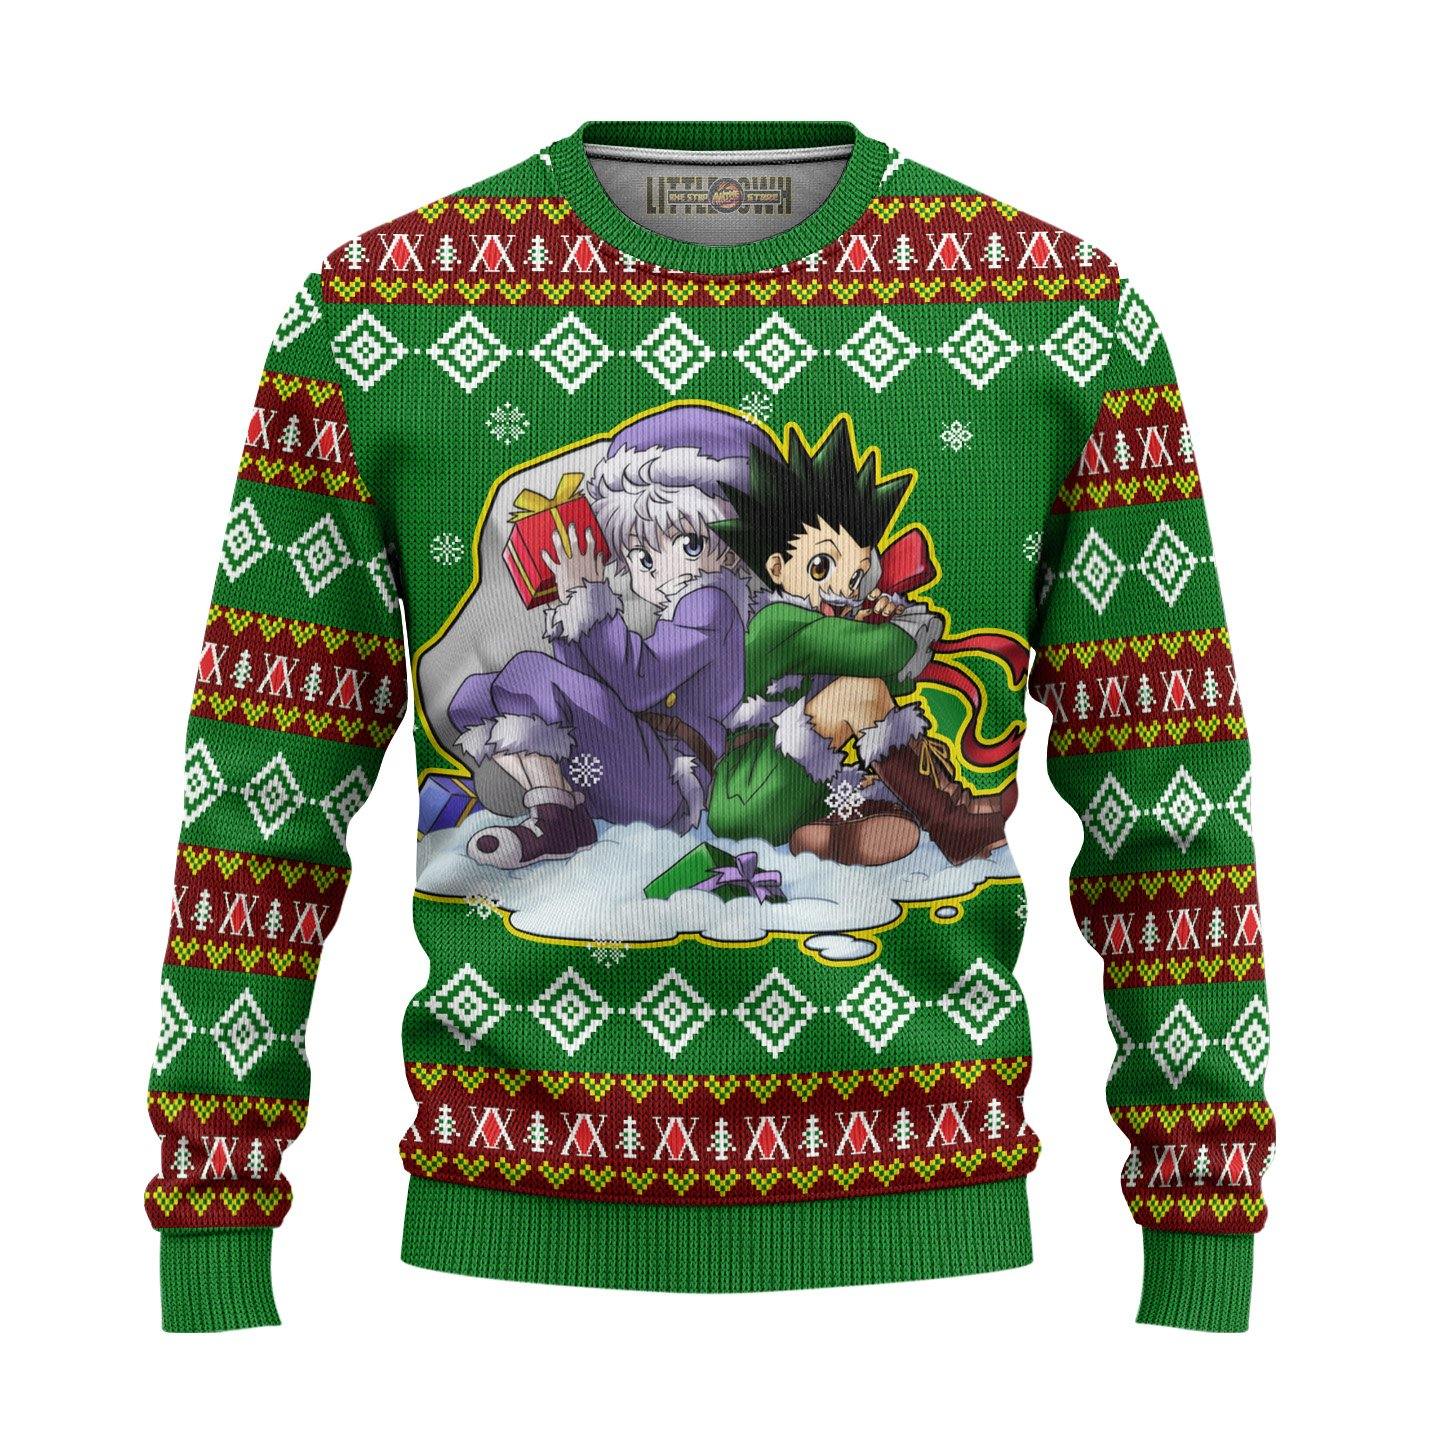 Gon And Killua Hunter x Hunter Anime Ugly Christmas Sweater Gift For Fans